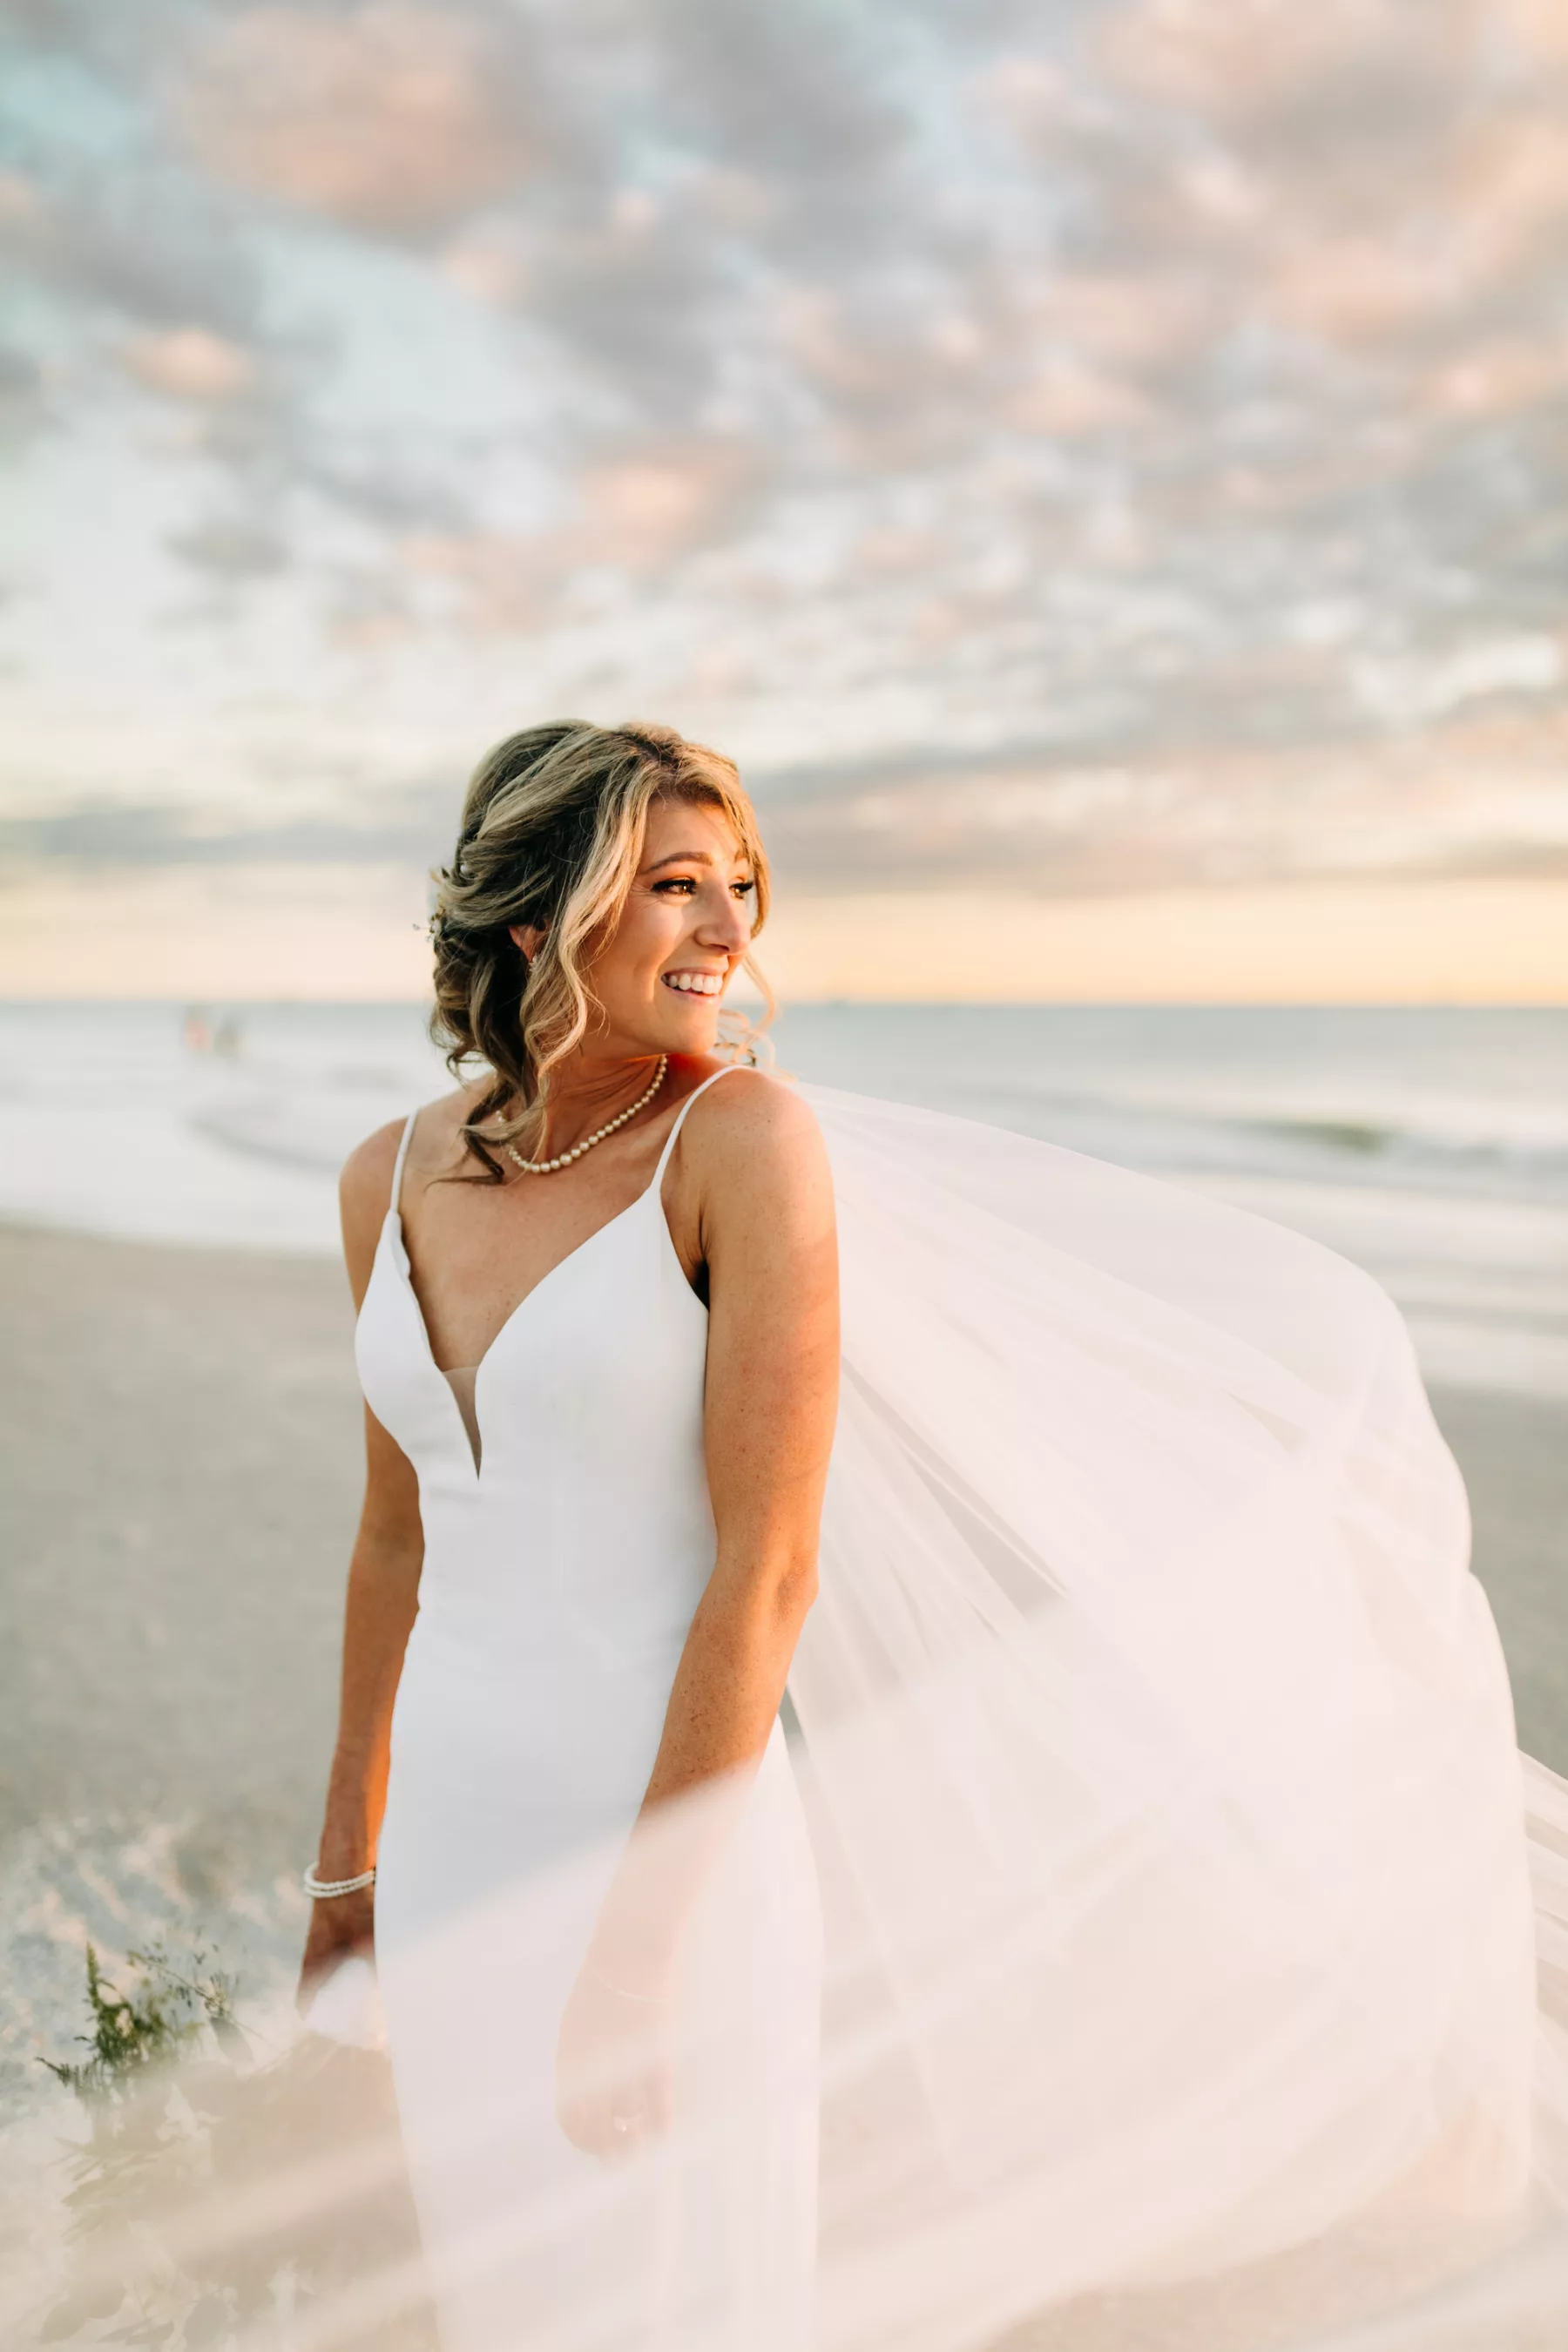 Whimsical Bridal Glamour Wedding Portrait | Tampa Bay Hair and Makeup Artist Femme Akoi Beauty Studio | Photographer Amber McWhorter Photography